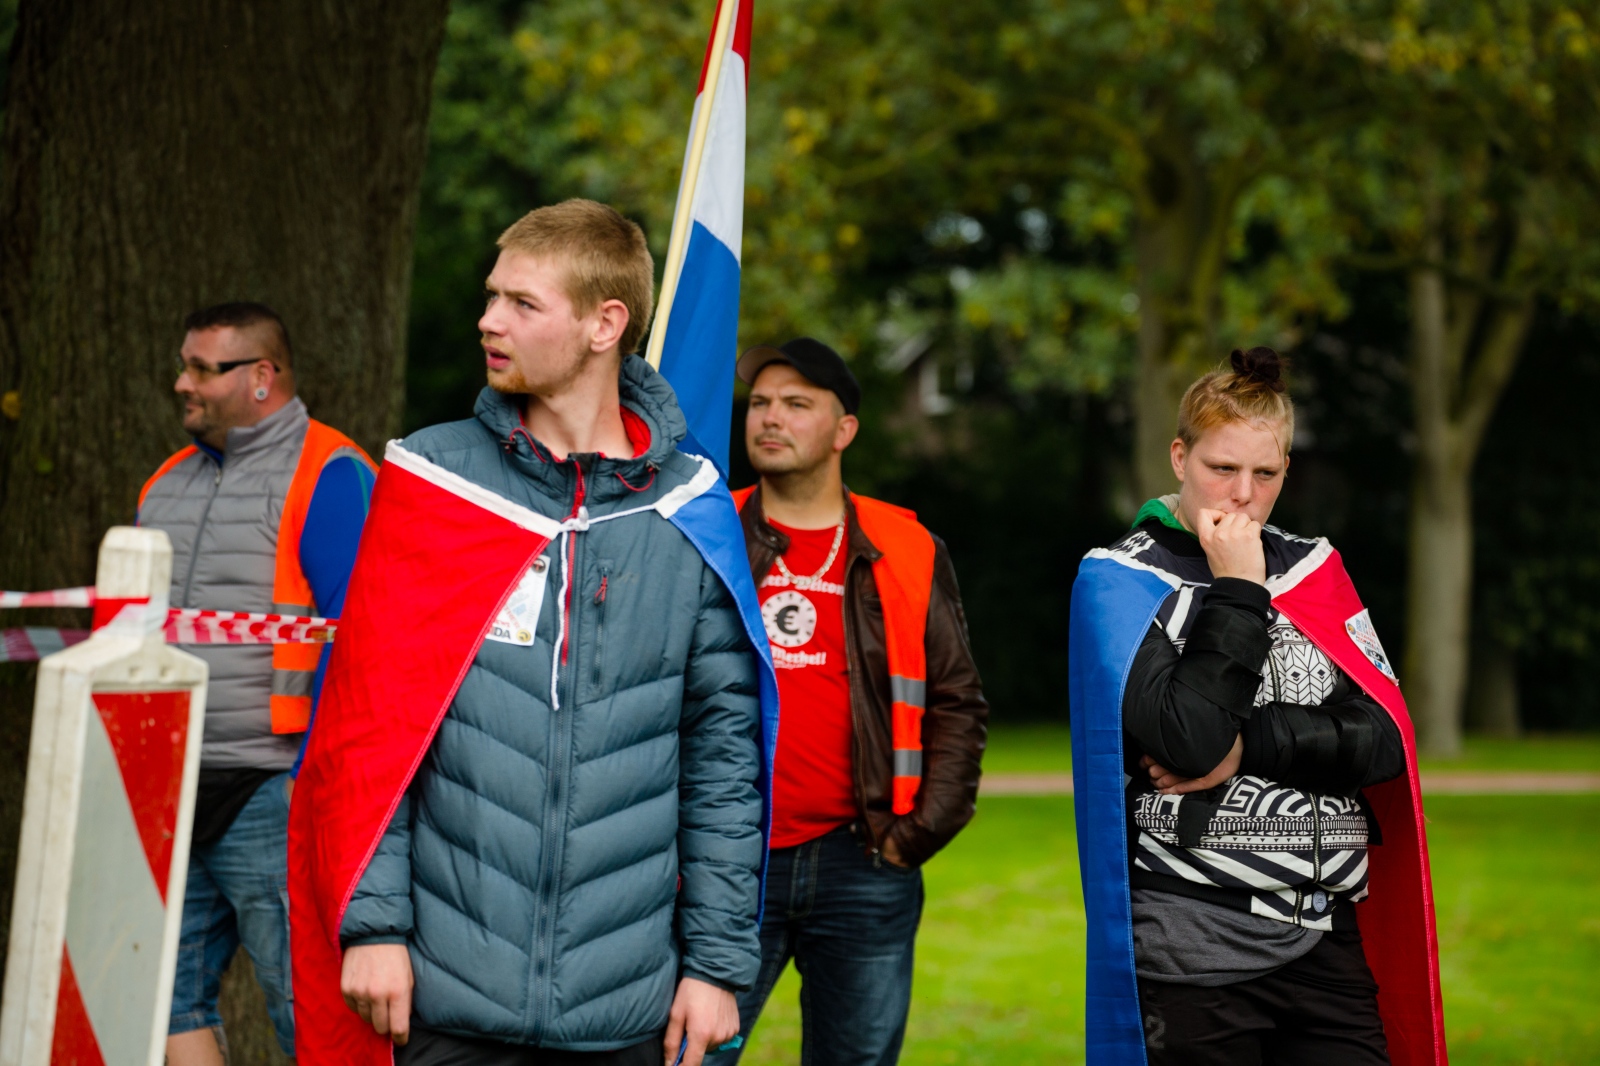 rally pegida - enschede, netherlands